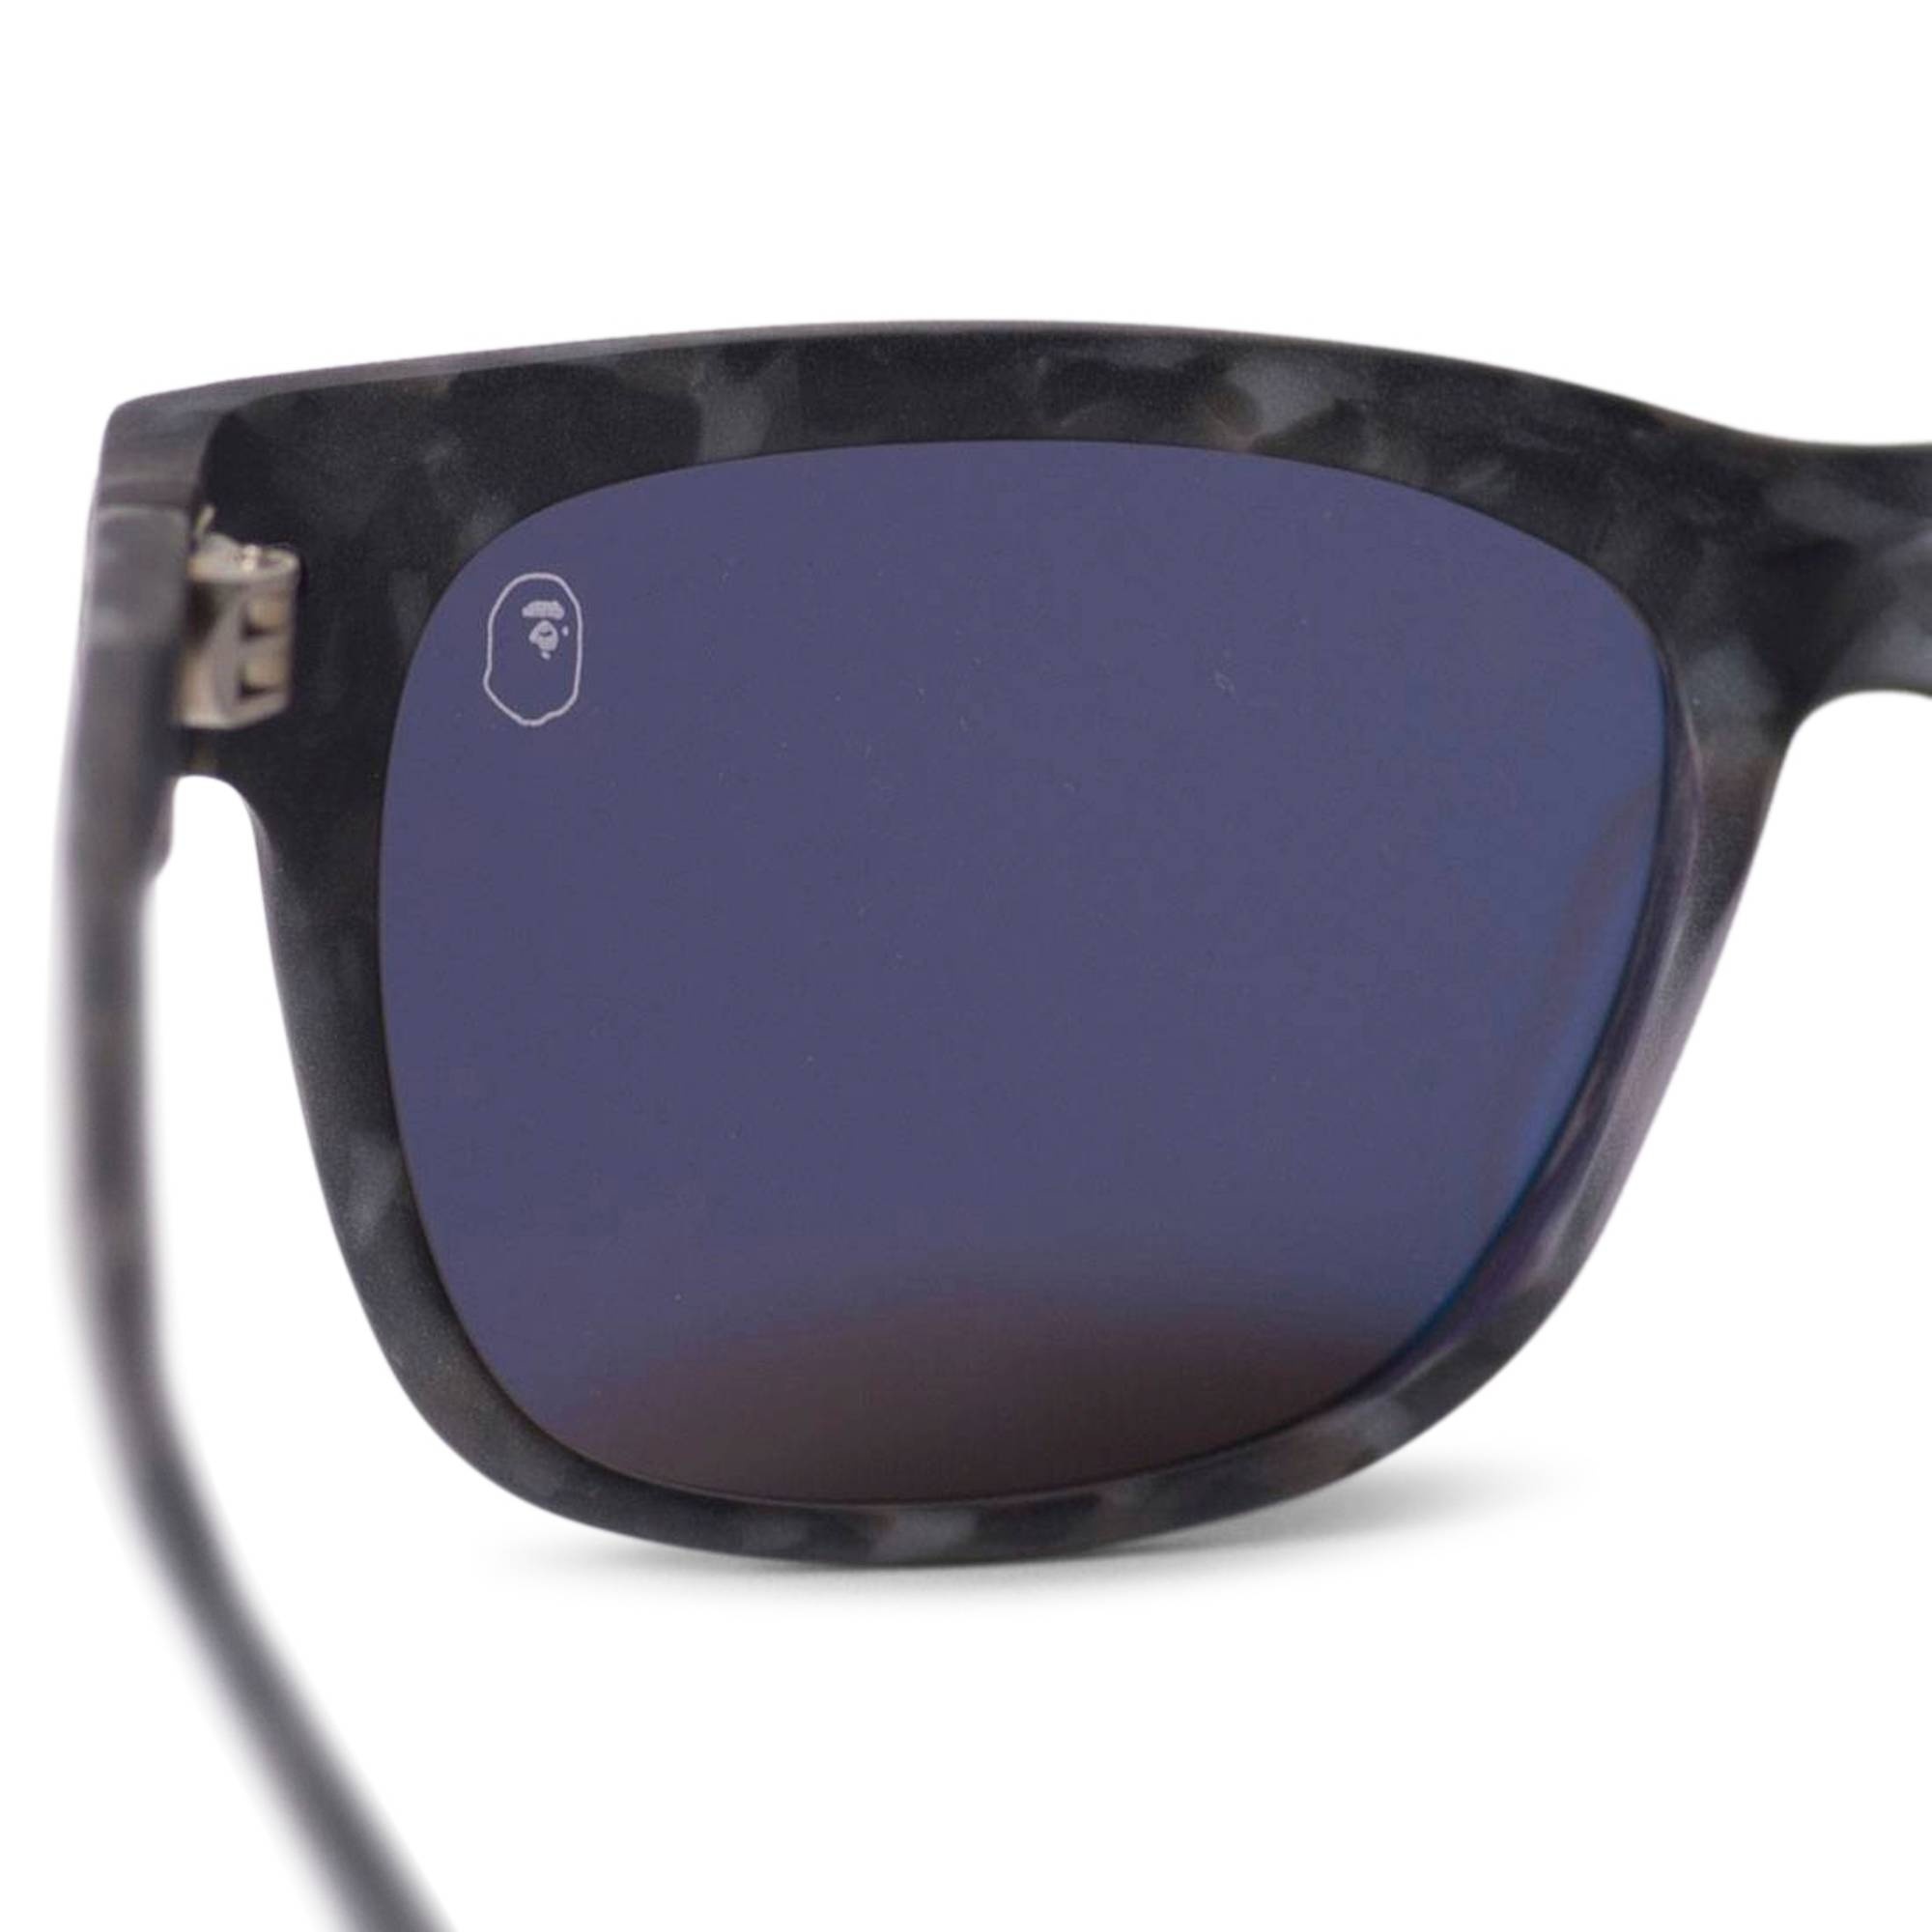 BAPE Sunglasses 'Grey' - 2